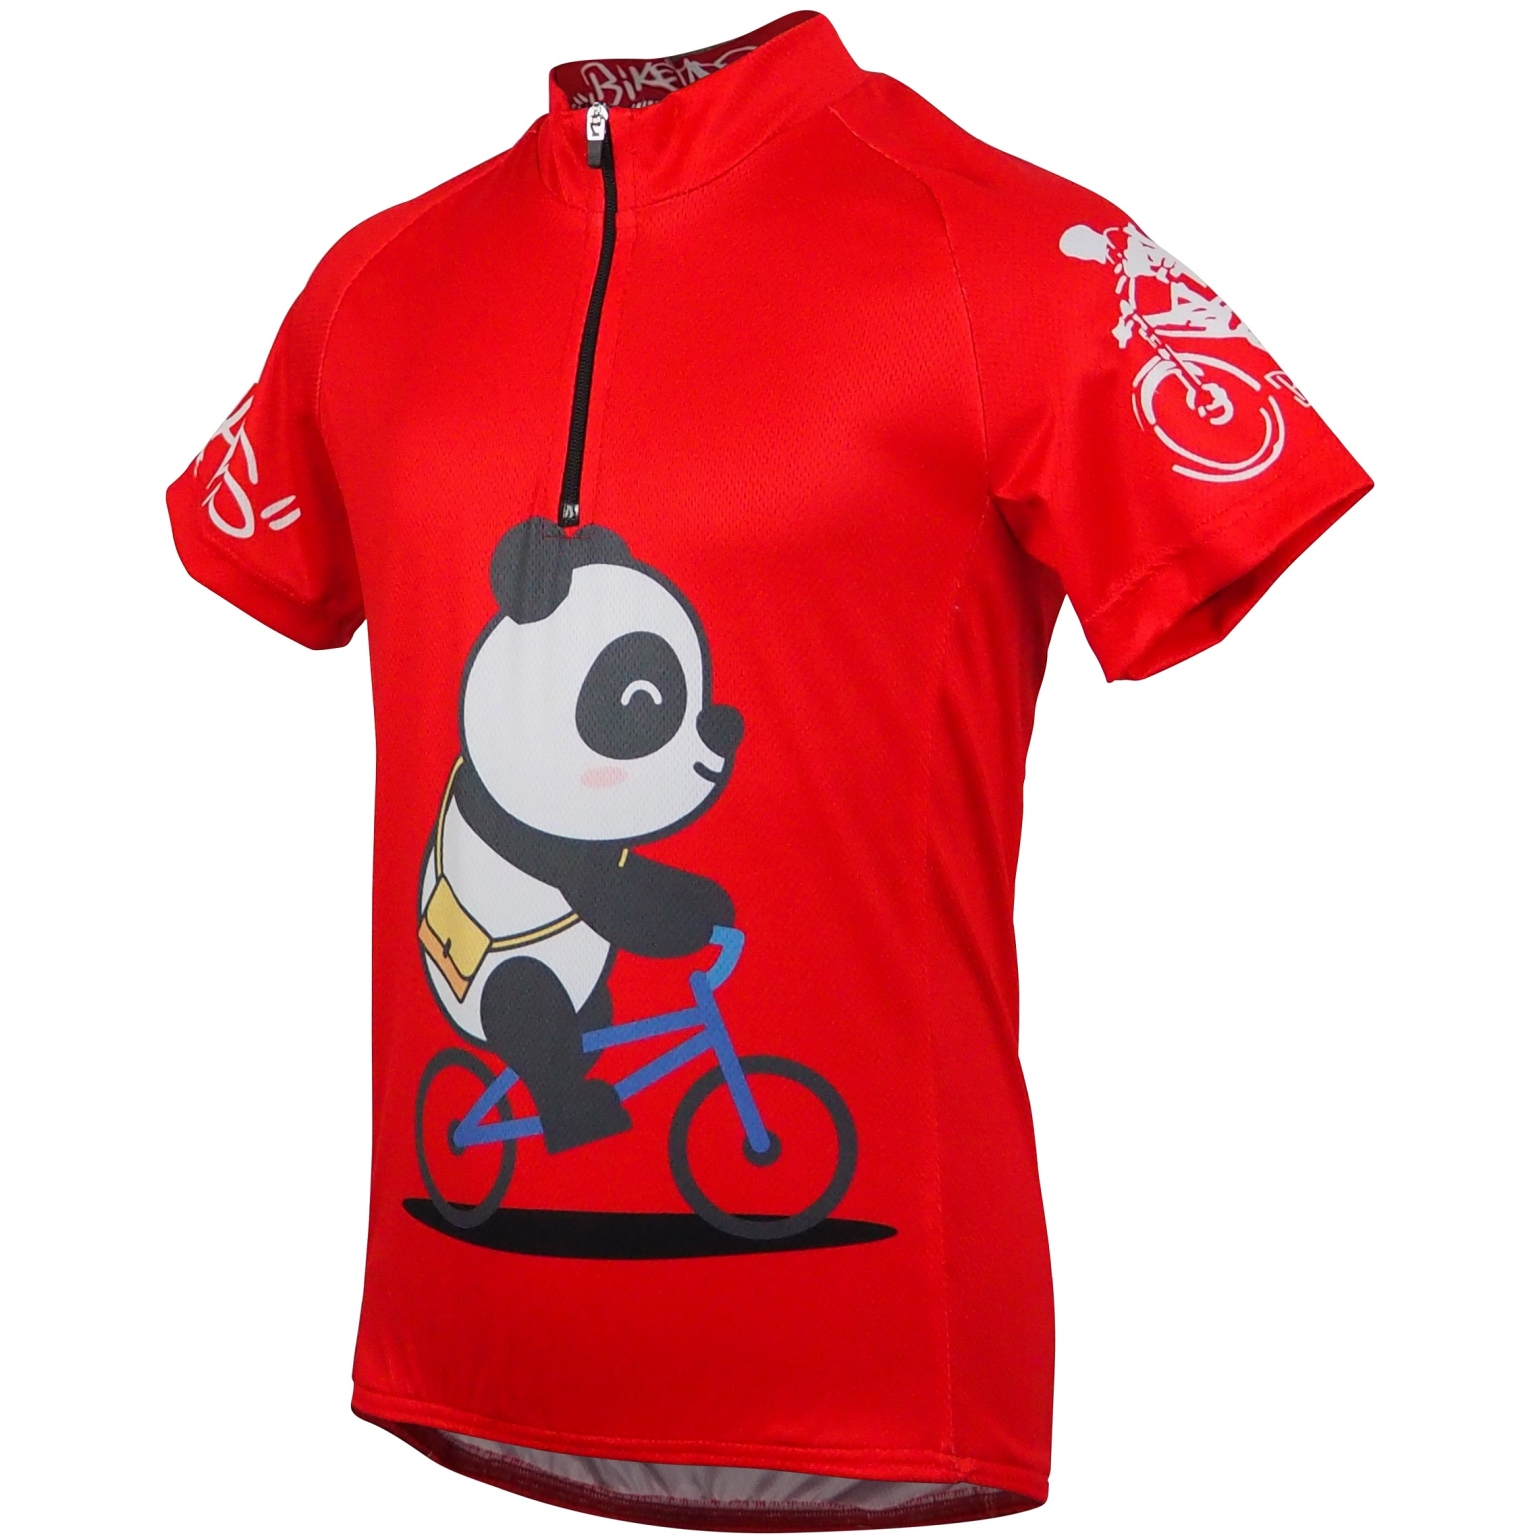 Productfoto van Biketags Cycling Jersey Kids - Panda Red